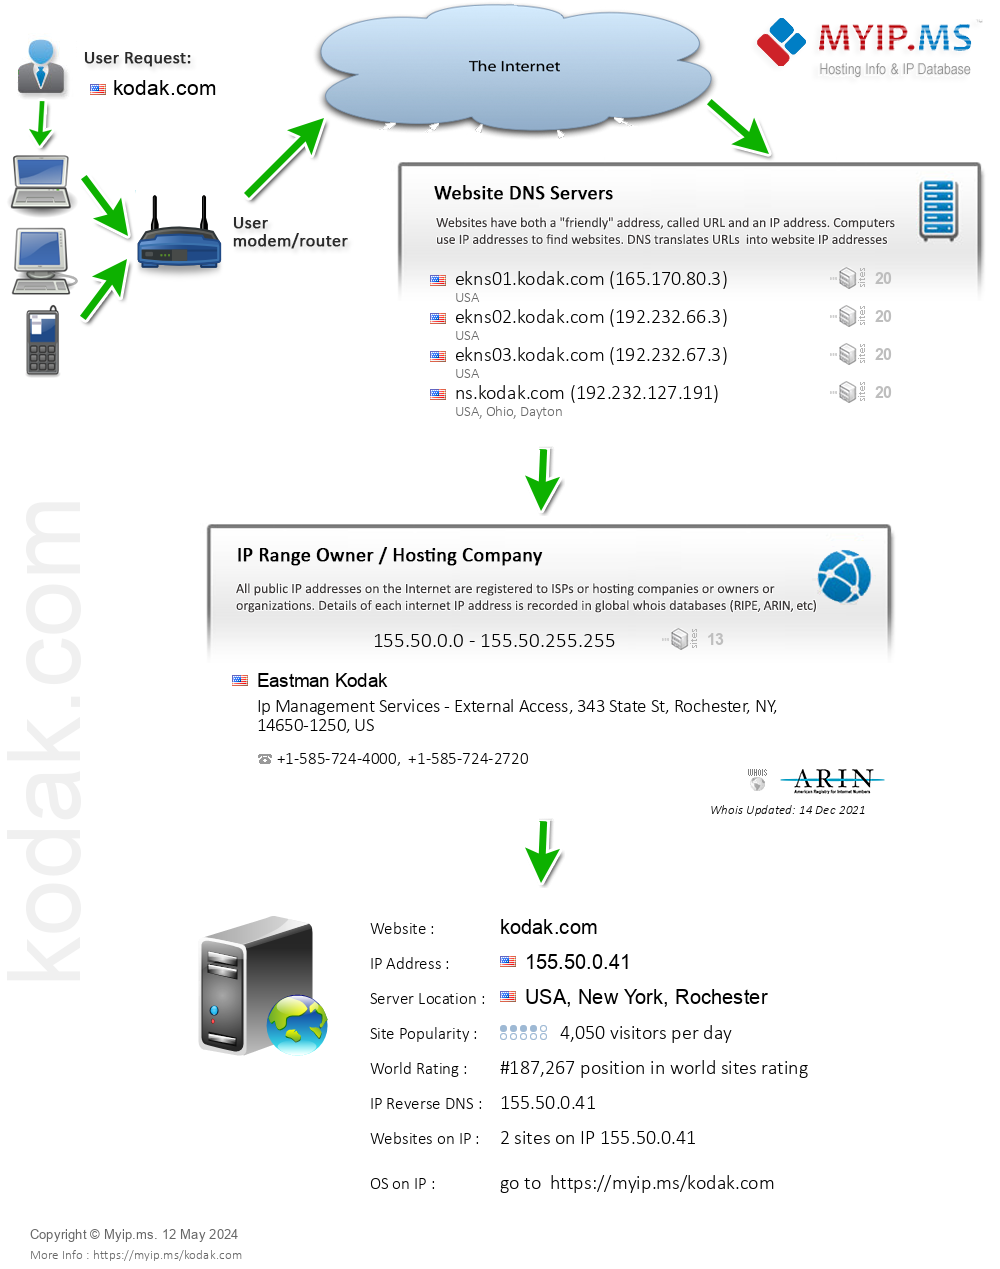 Kodak.com - Website Hosting Visual IP Diagram